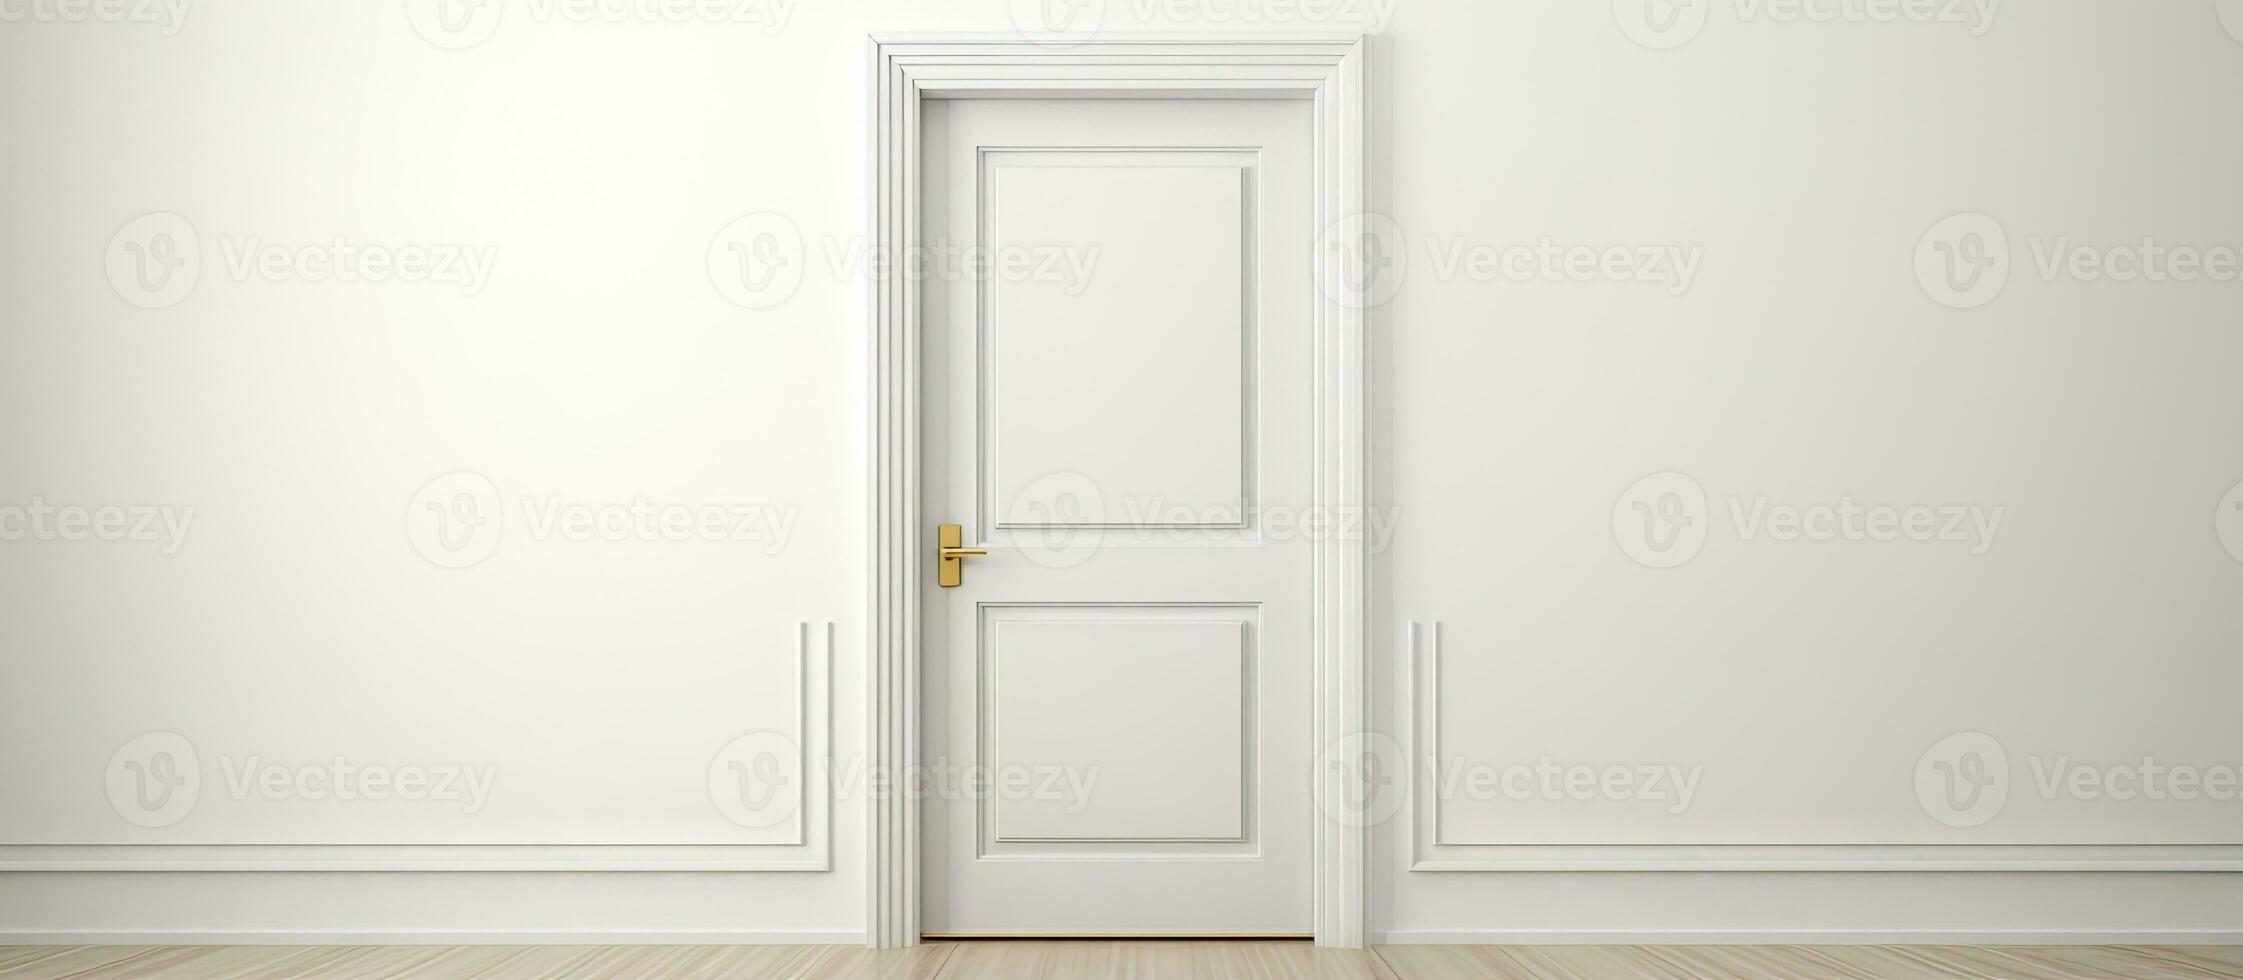 White wooden door with gold doorknob on gray wall photo